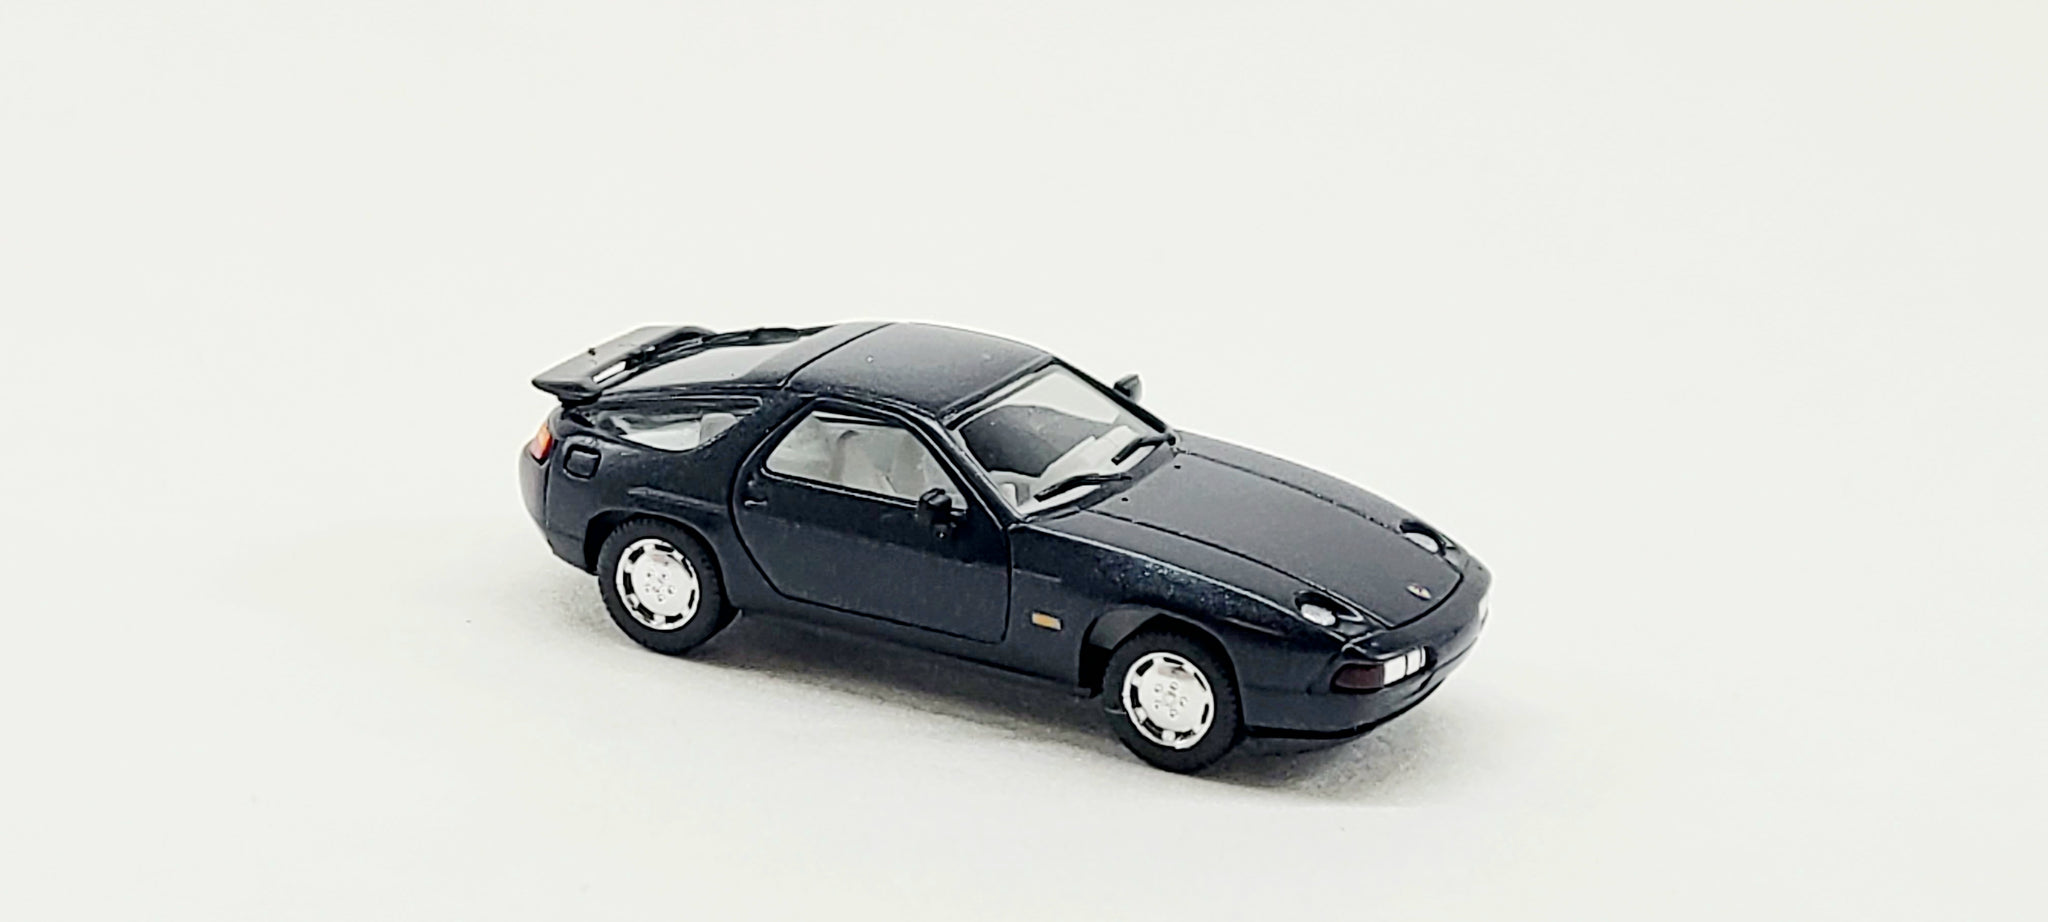 HERPA 1:87 Scale Porsche 928 S4 Black No Sunroof Model in ...